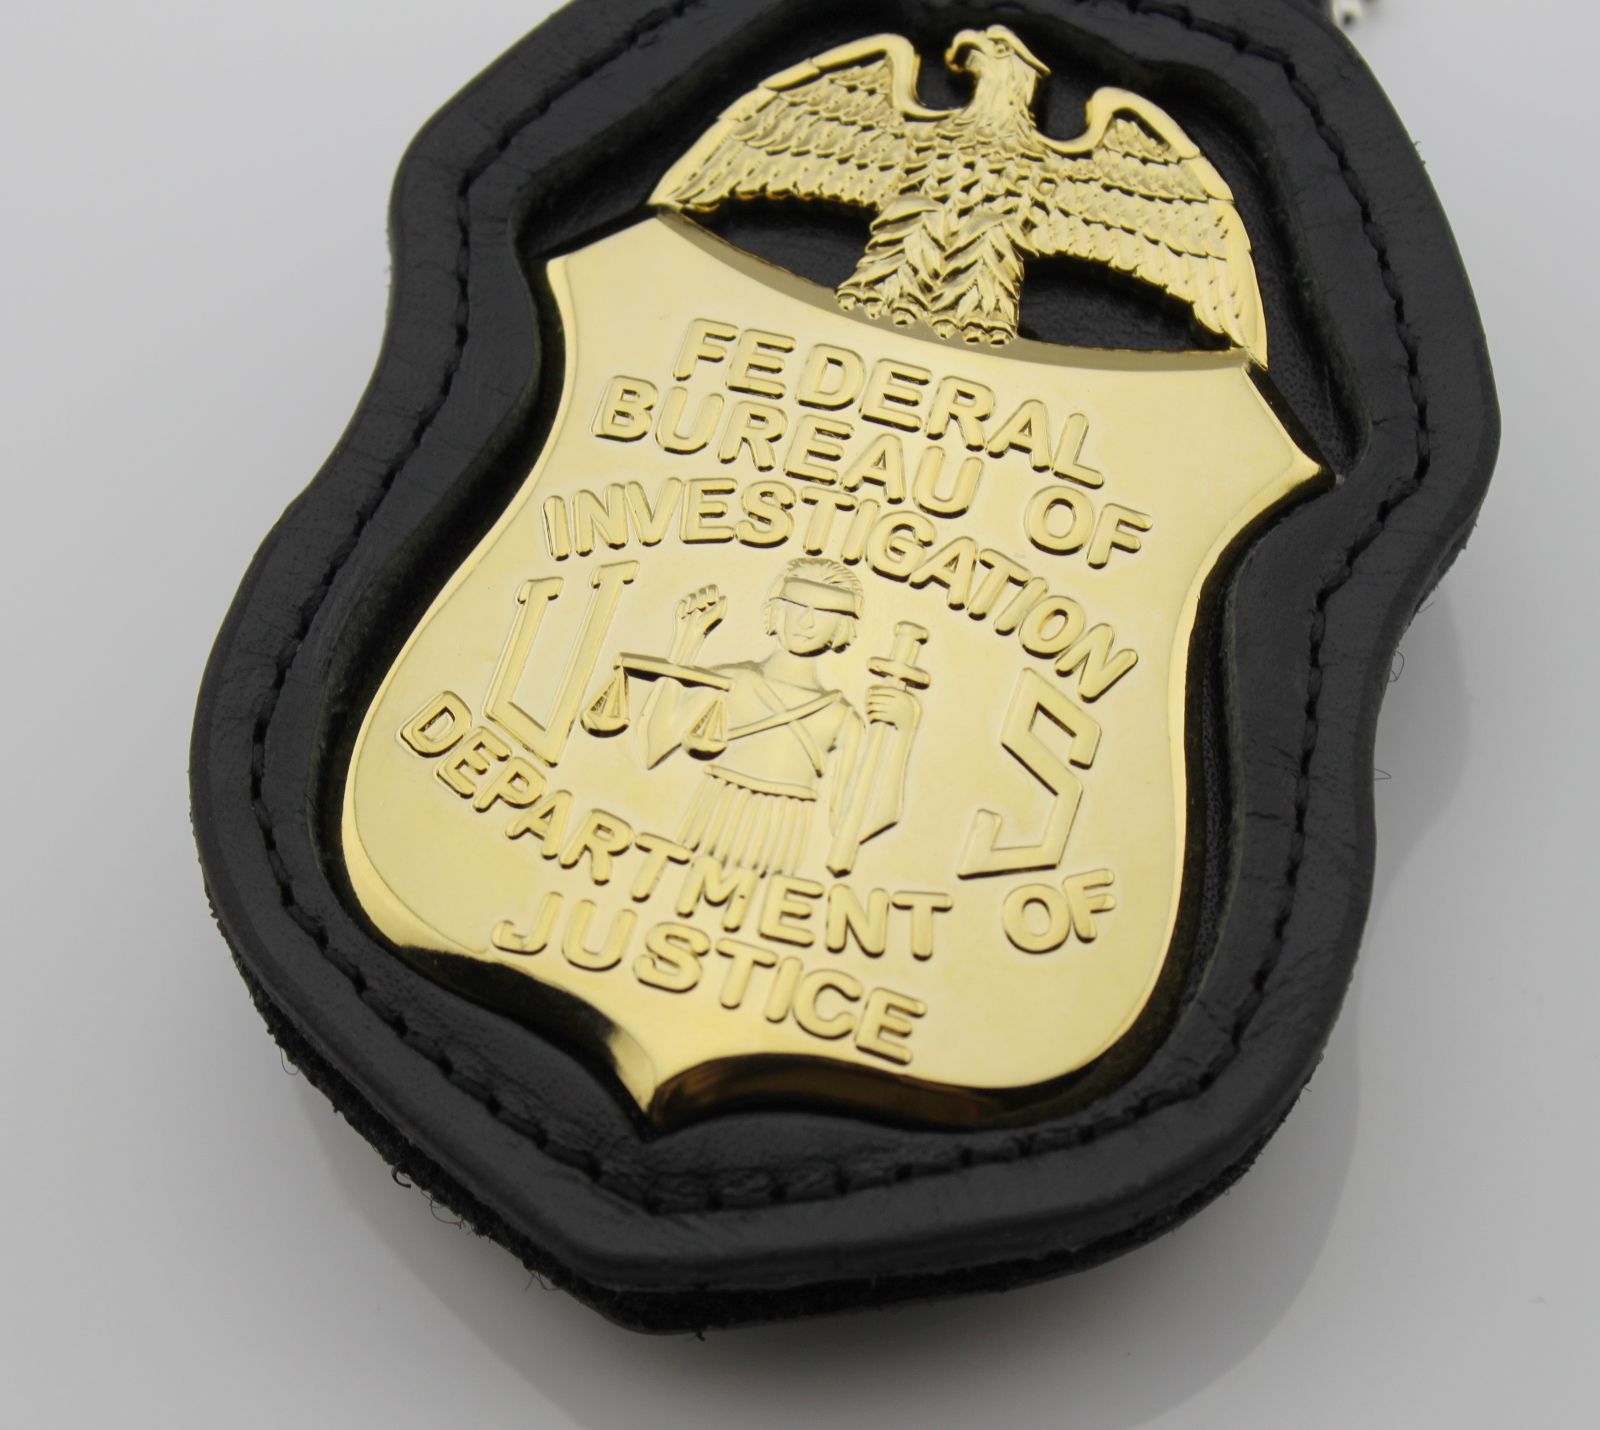 Replica Police Cop Metal Badge High Quality Federal Bureau of